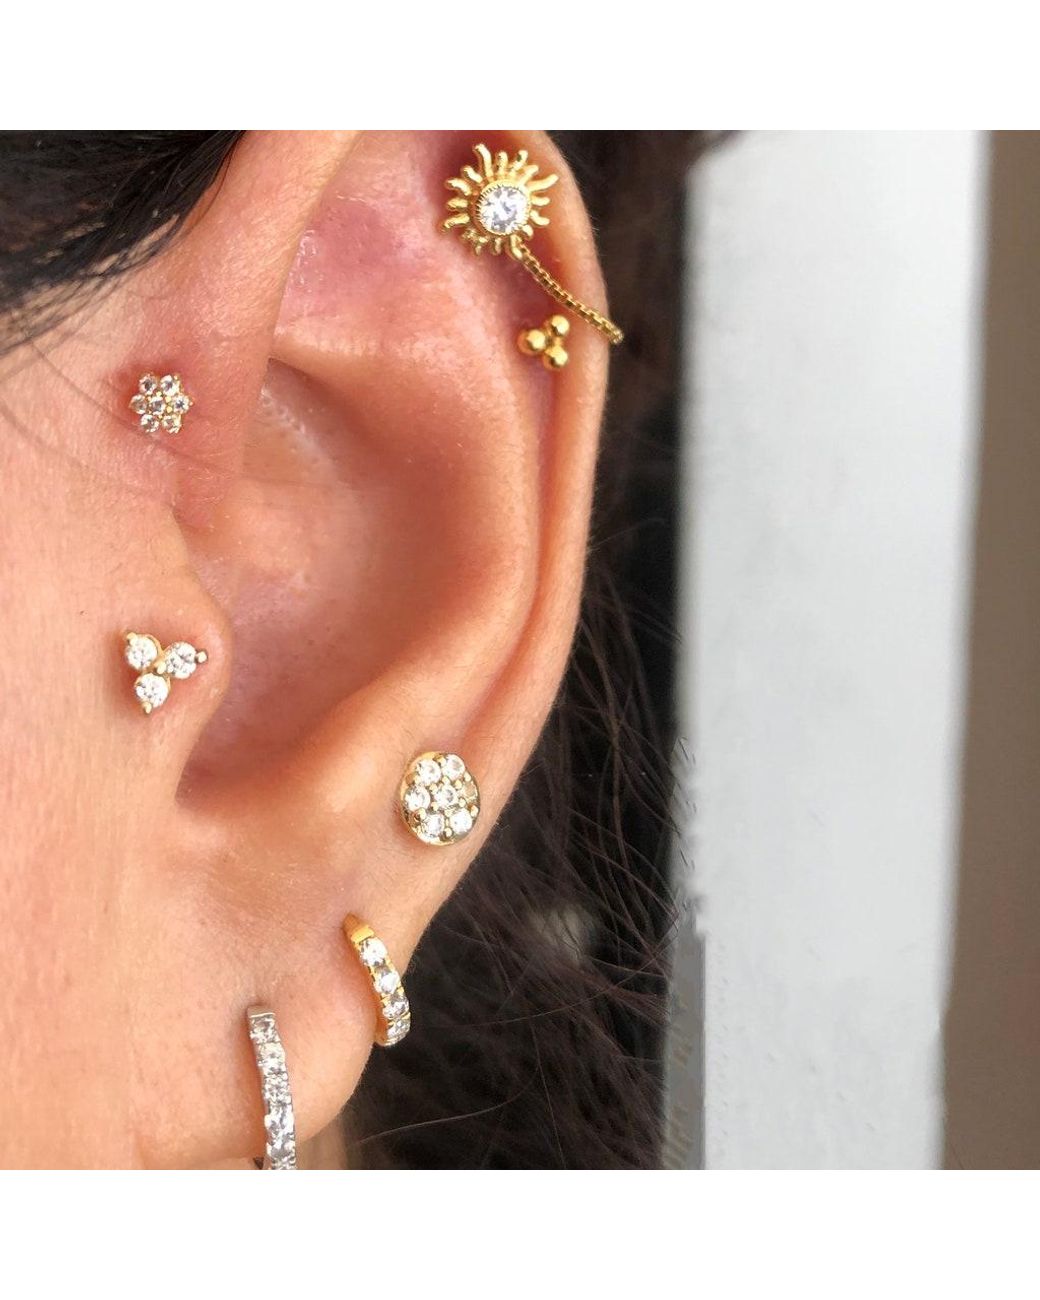 2 Pcs Round Tragus Lip Ring Monroe Ear Cartilage Stud Earring Body Piercing NWUS